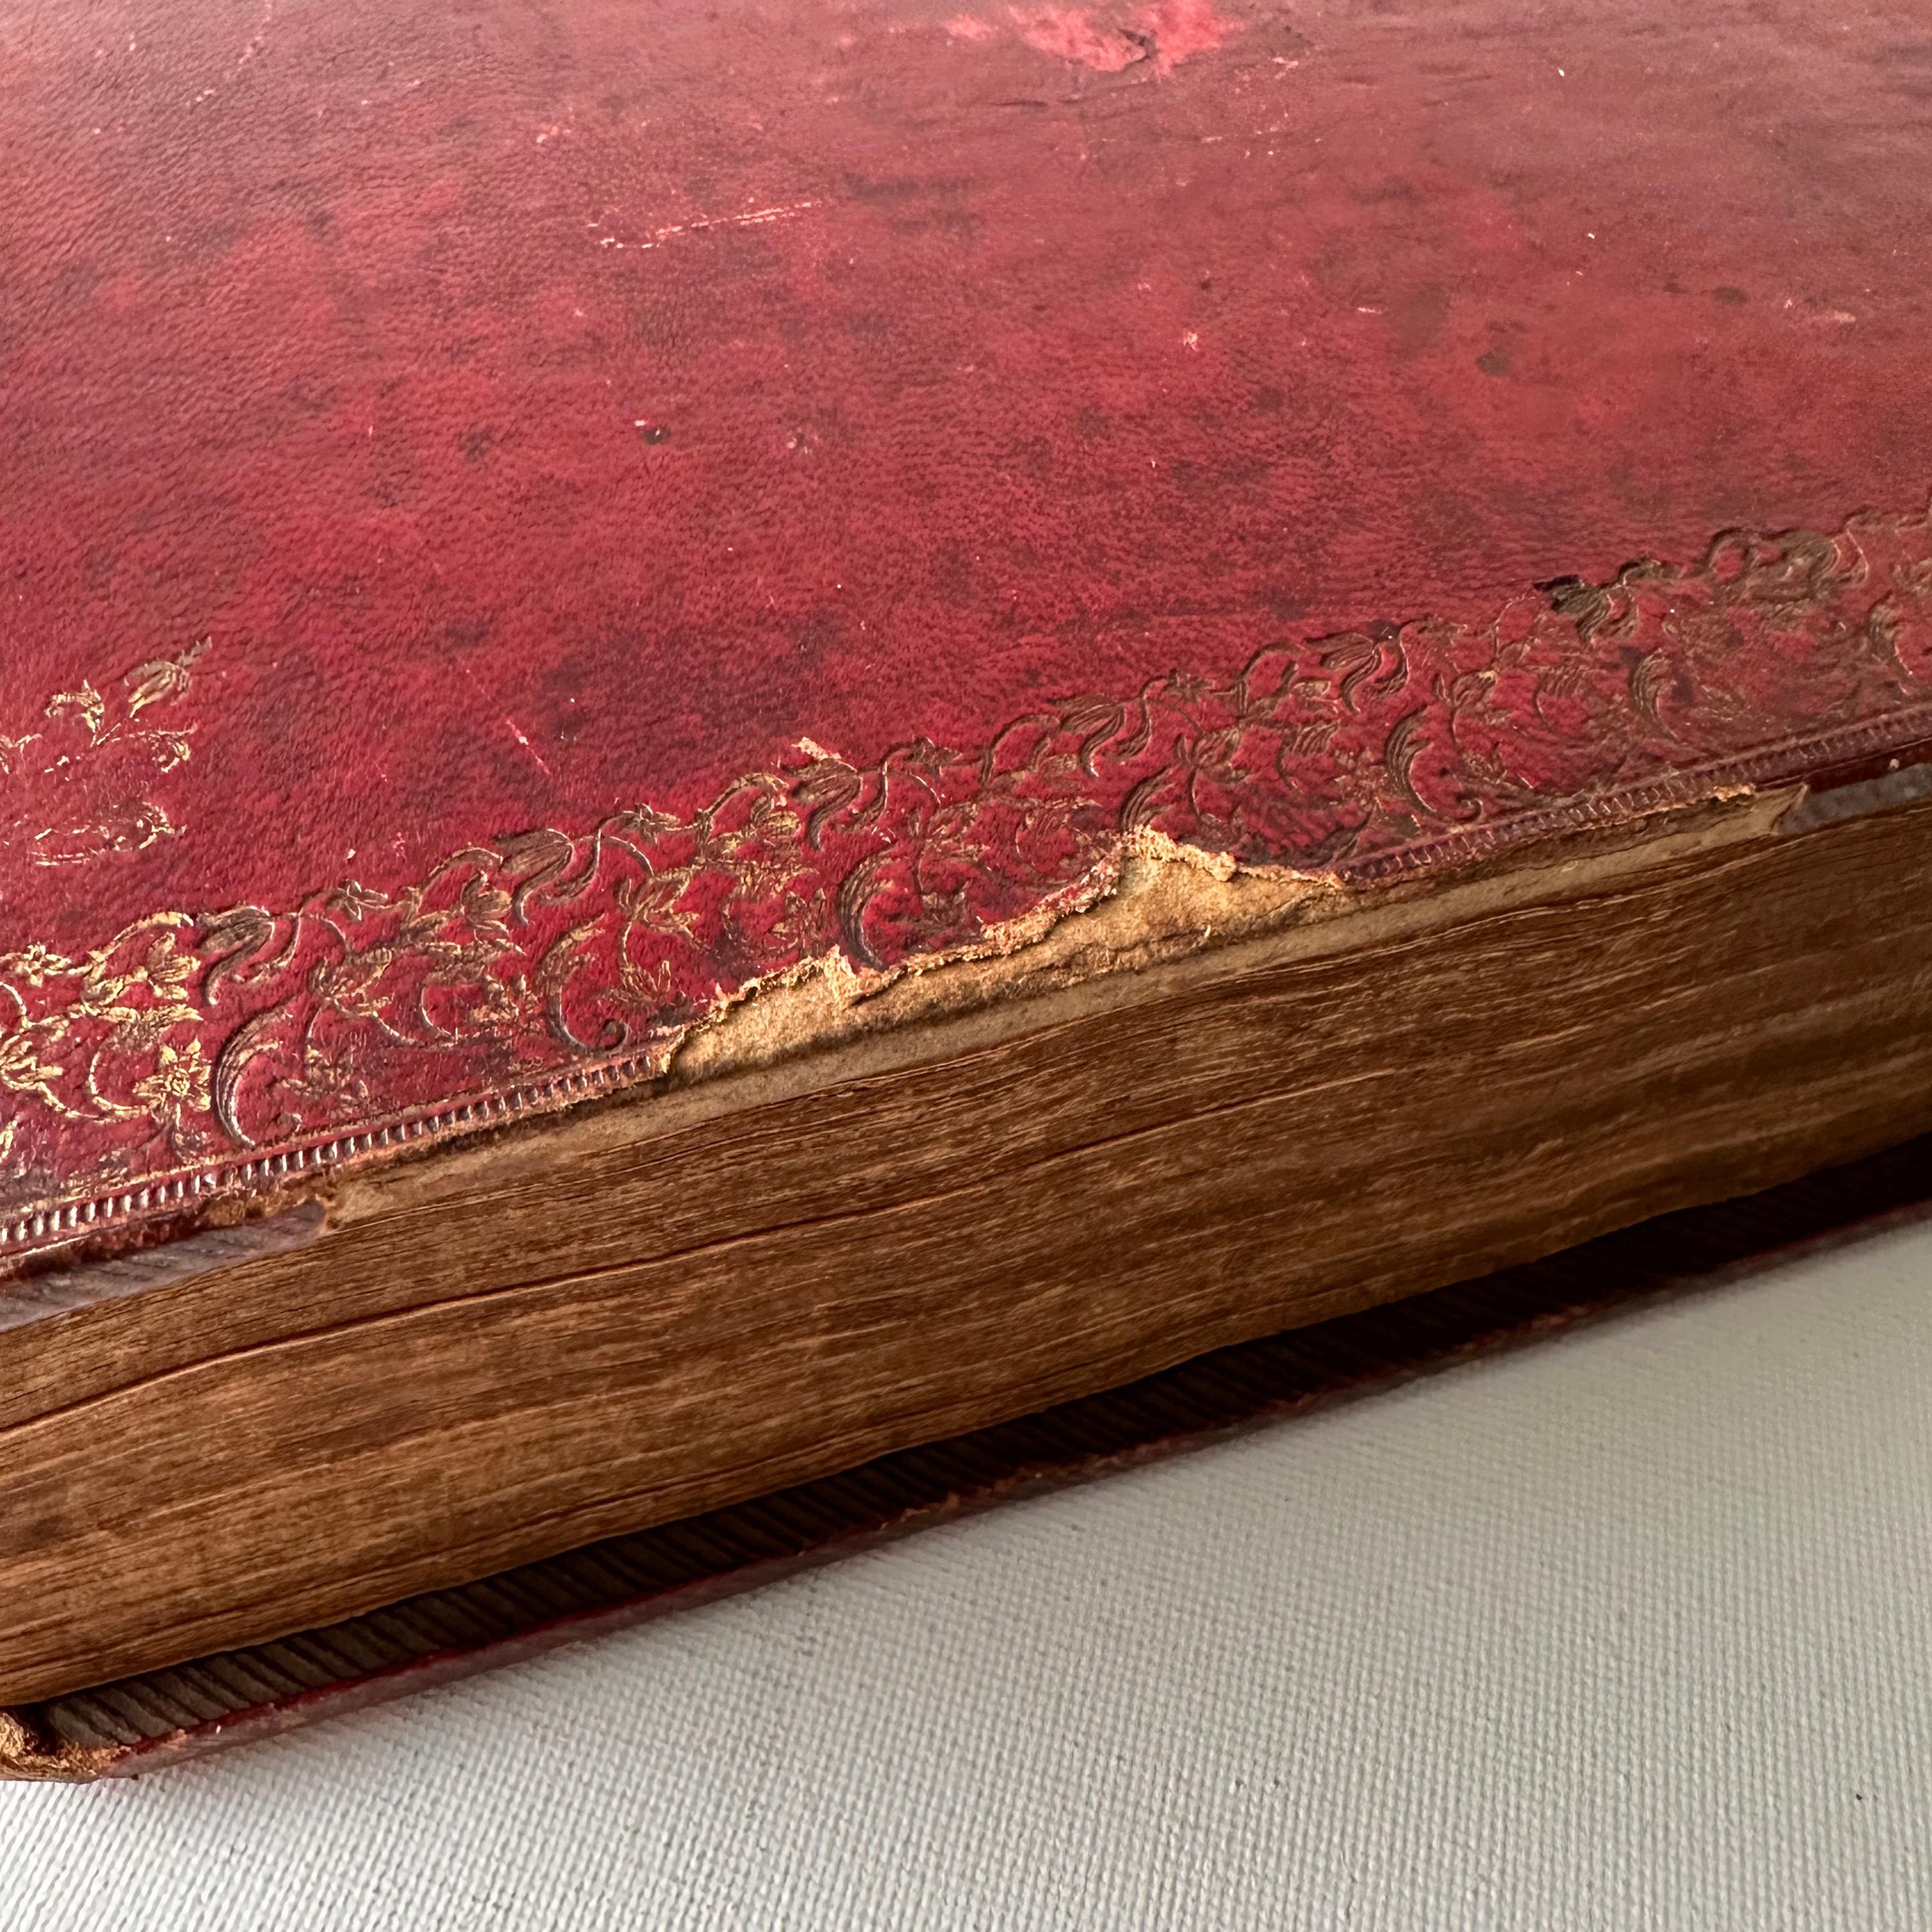 17th Century Geneva Bible, Christopher Barker, London, Dated 1599 For Sale